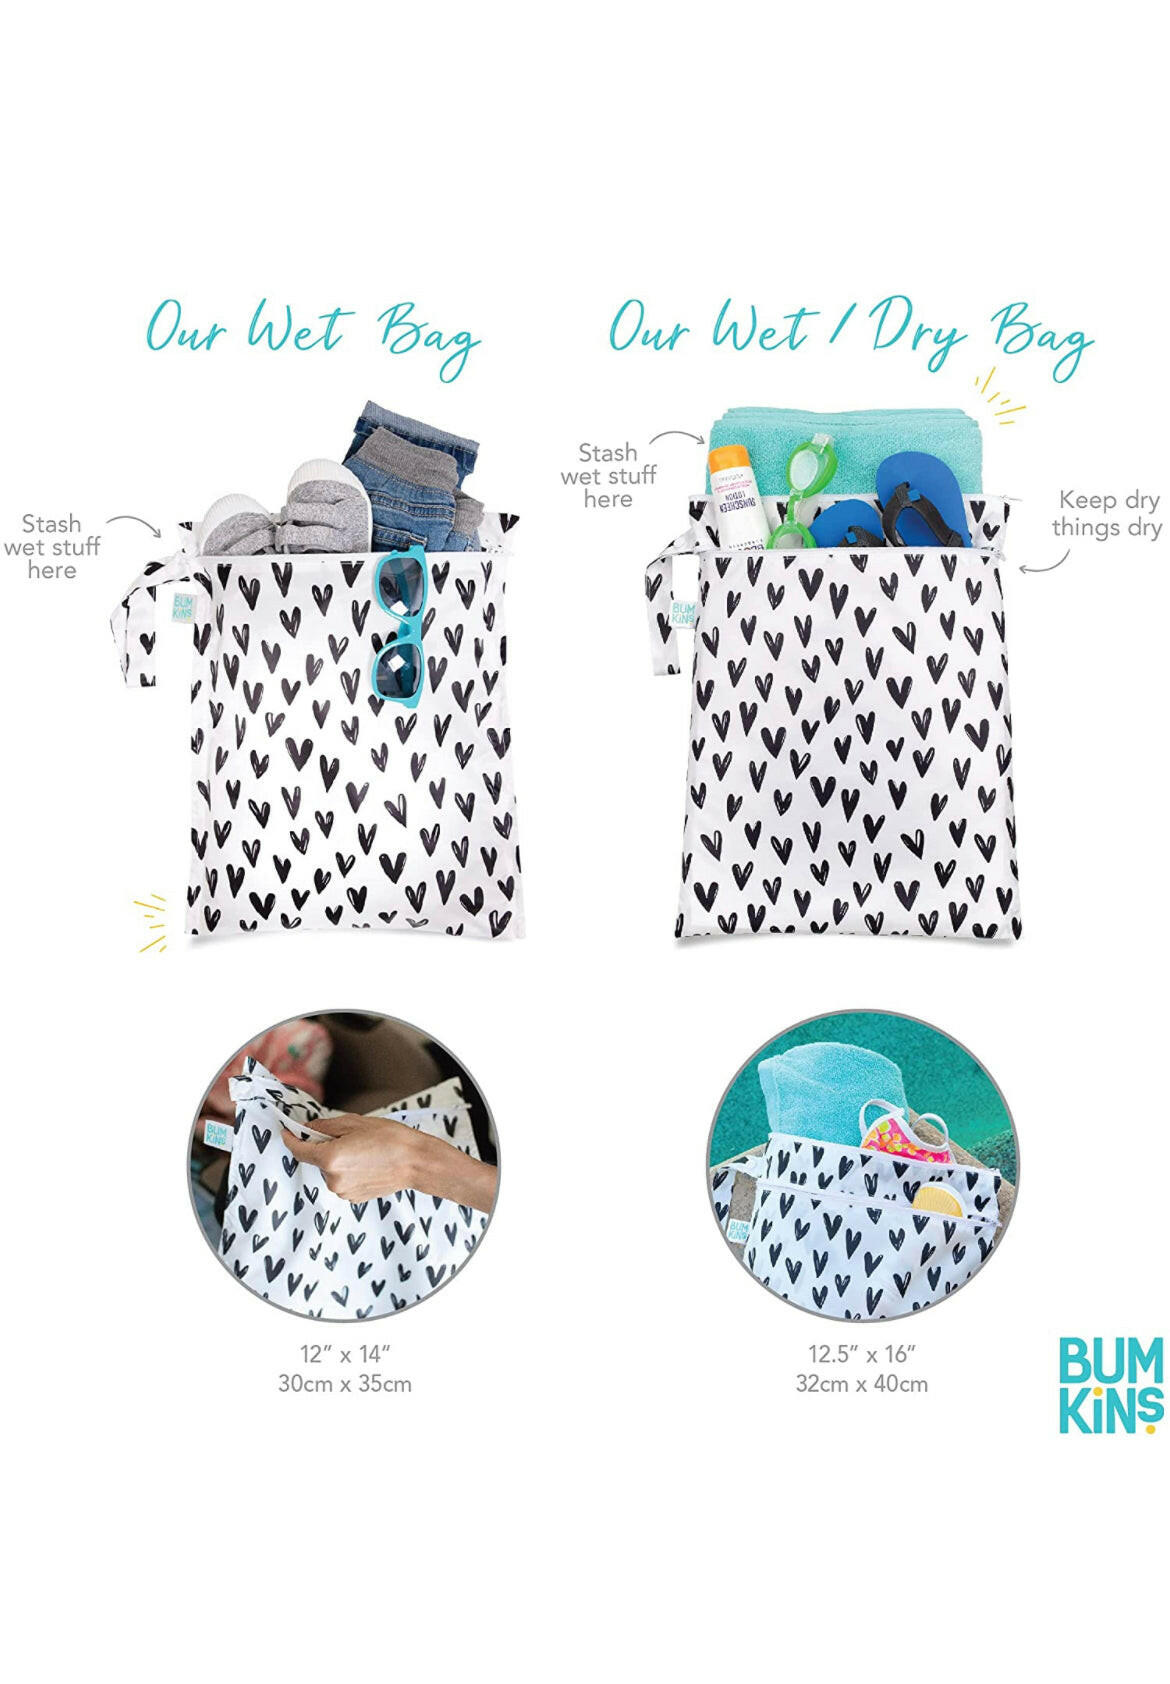 Bumkins Waterproof Wet Bags for Baby items.